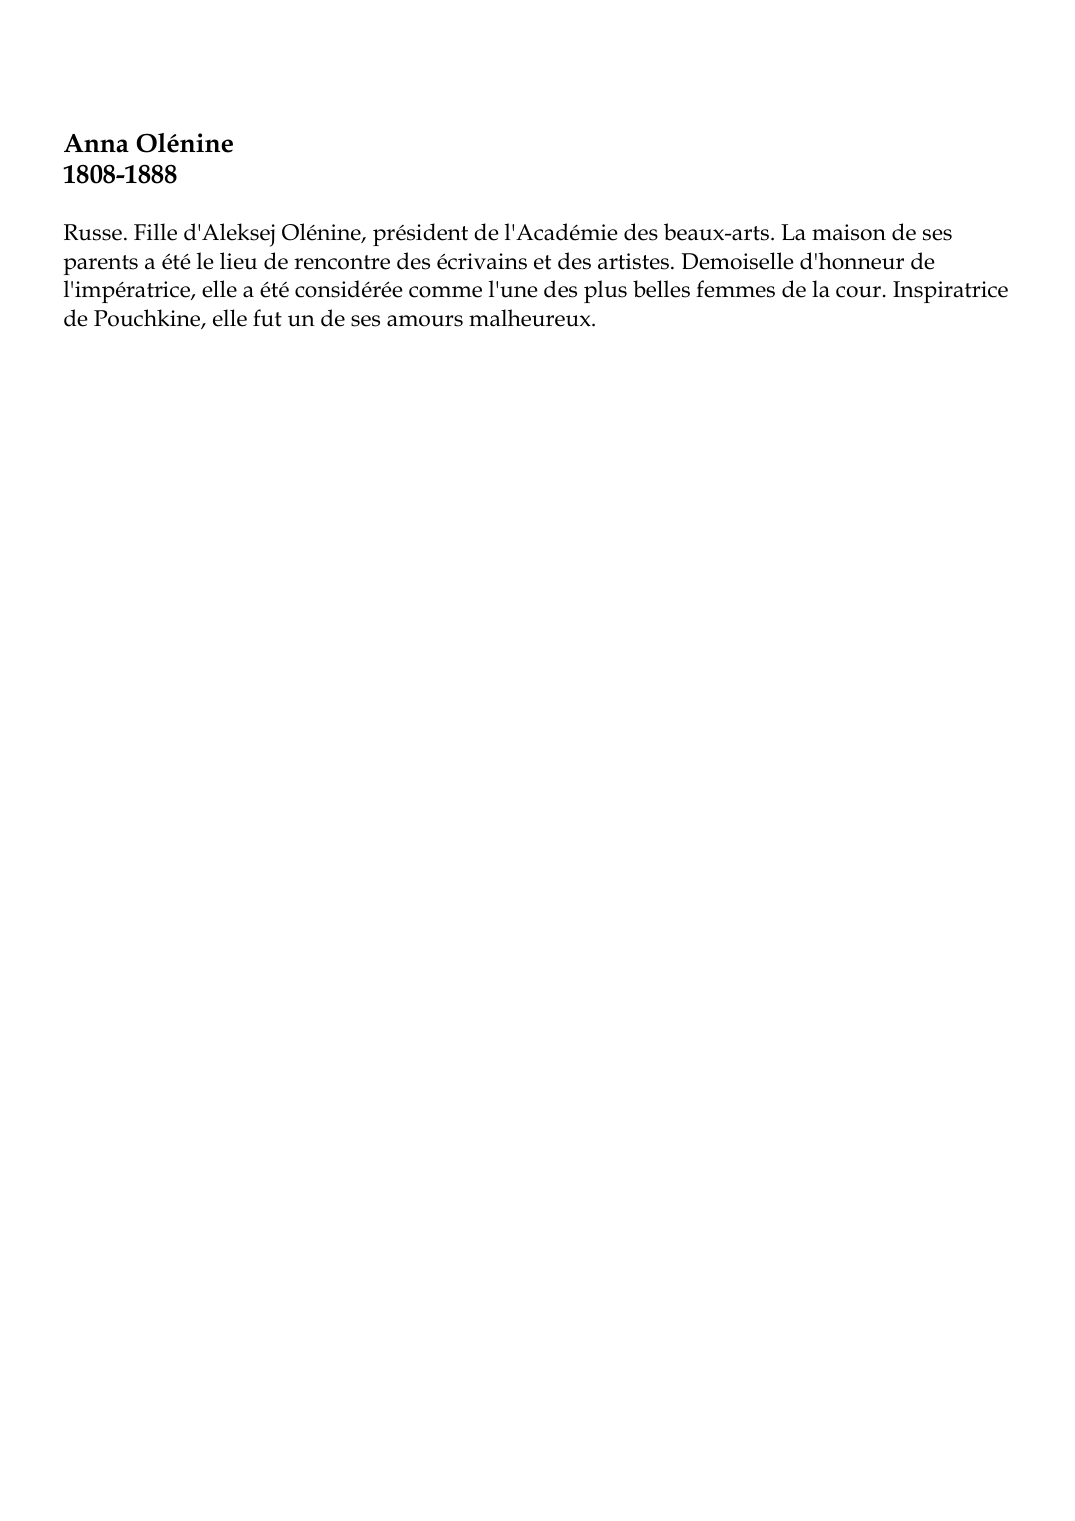 Prévisualisation du document Anna Olénine1808-1888Russe.